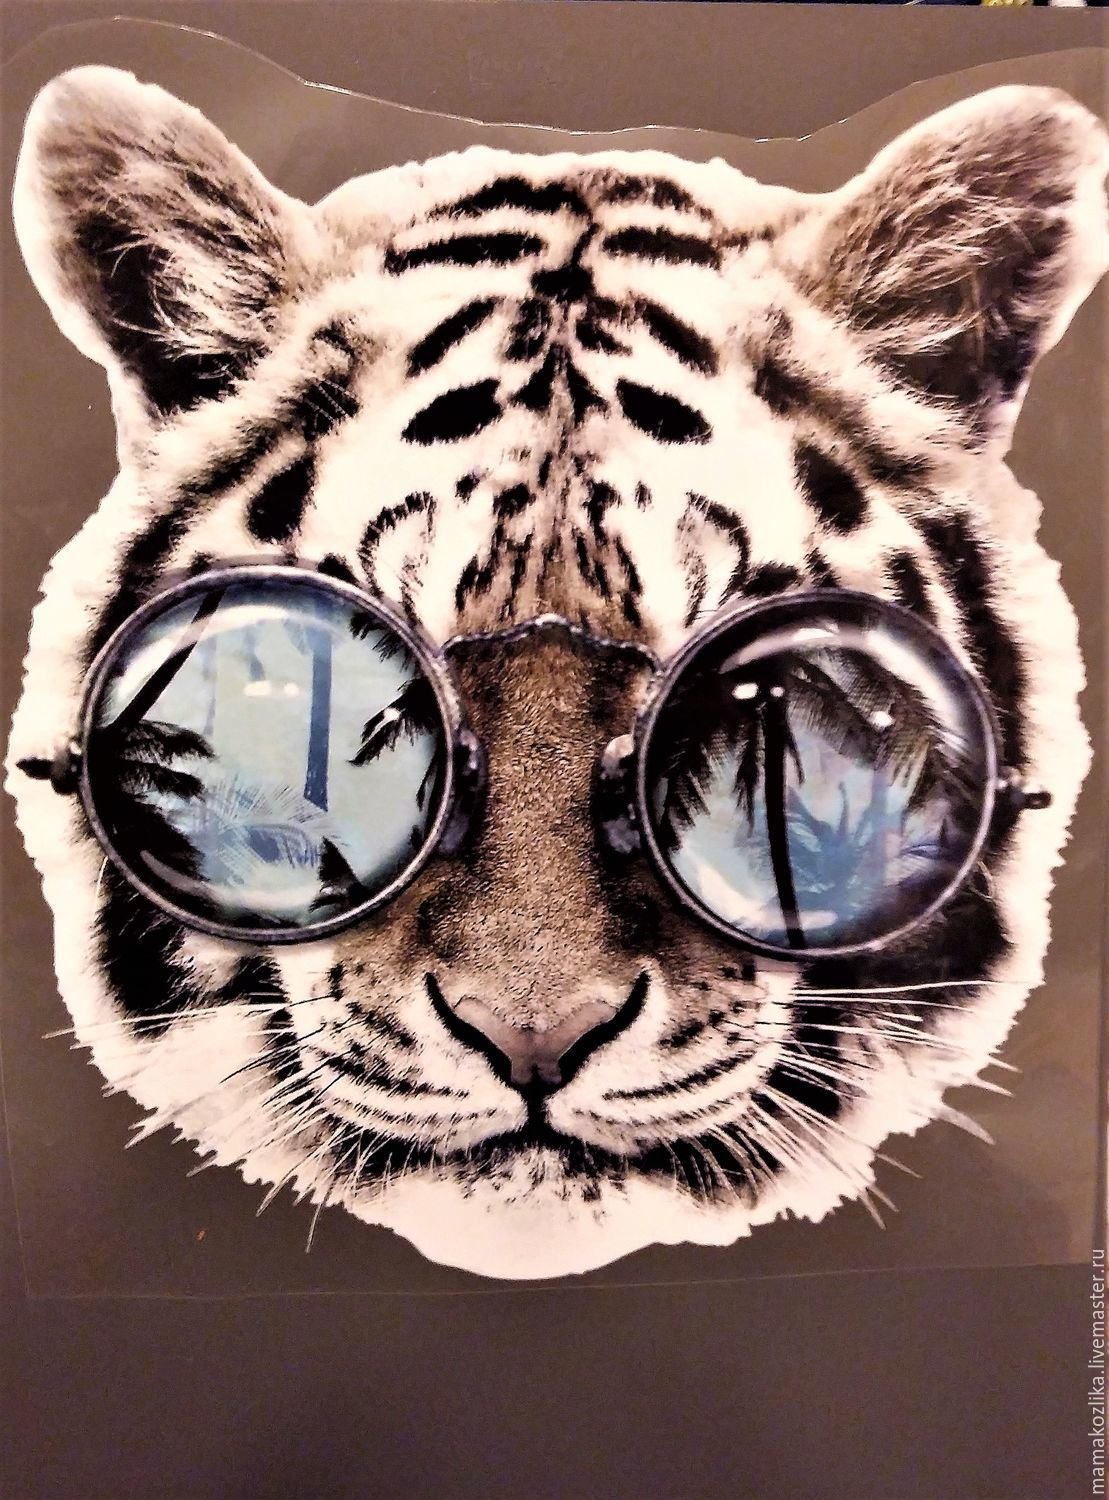 Тигр в очках арт (67 фото)